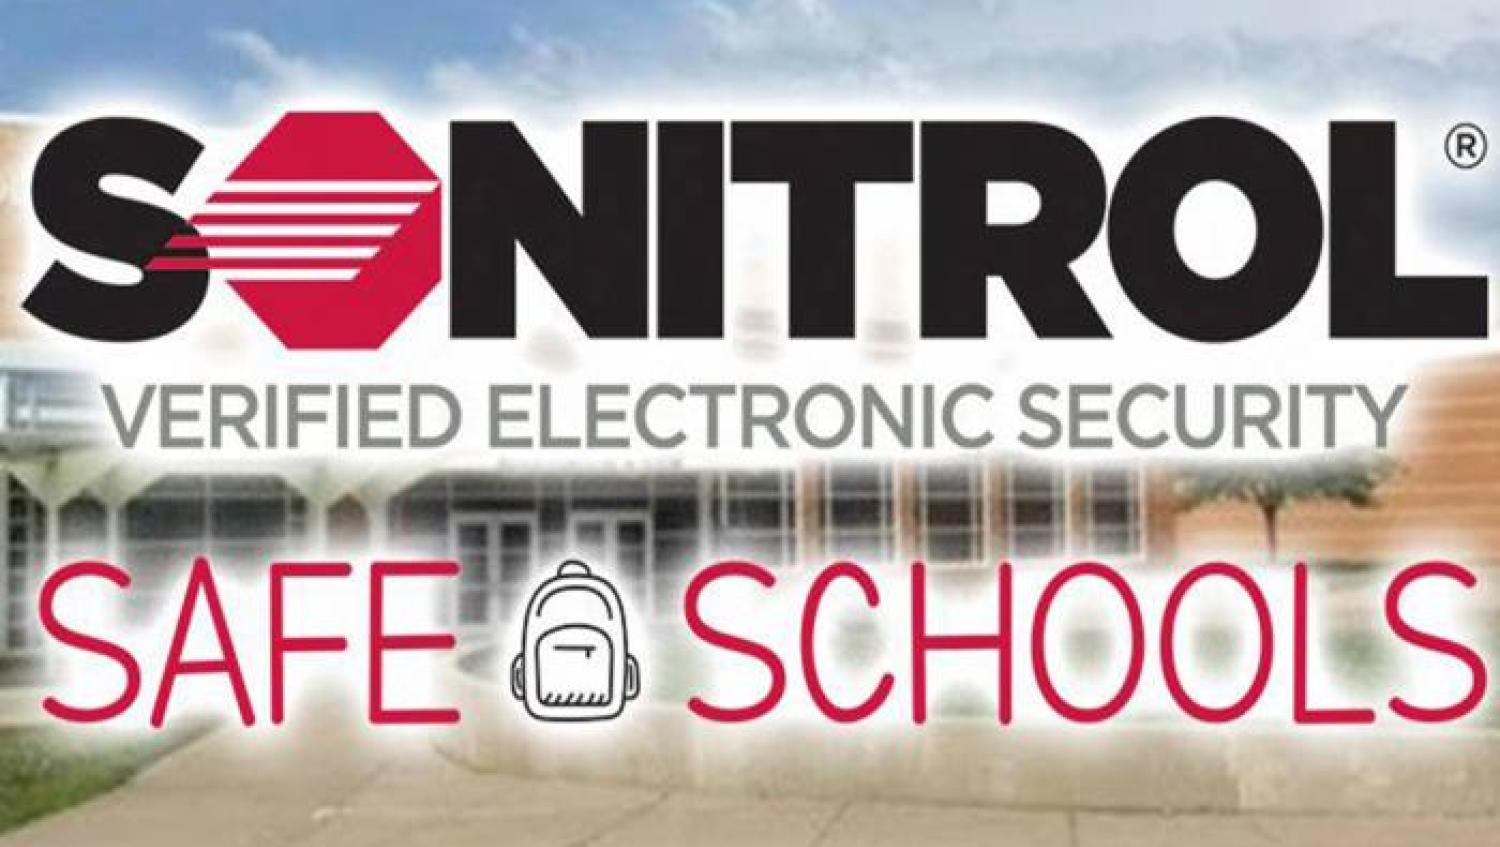 Sonitrol Safe Schools graphic